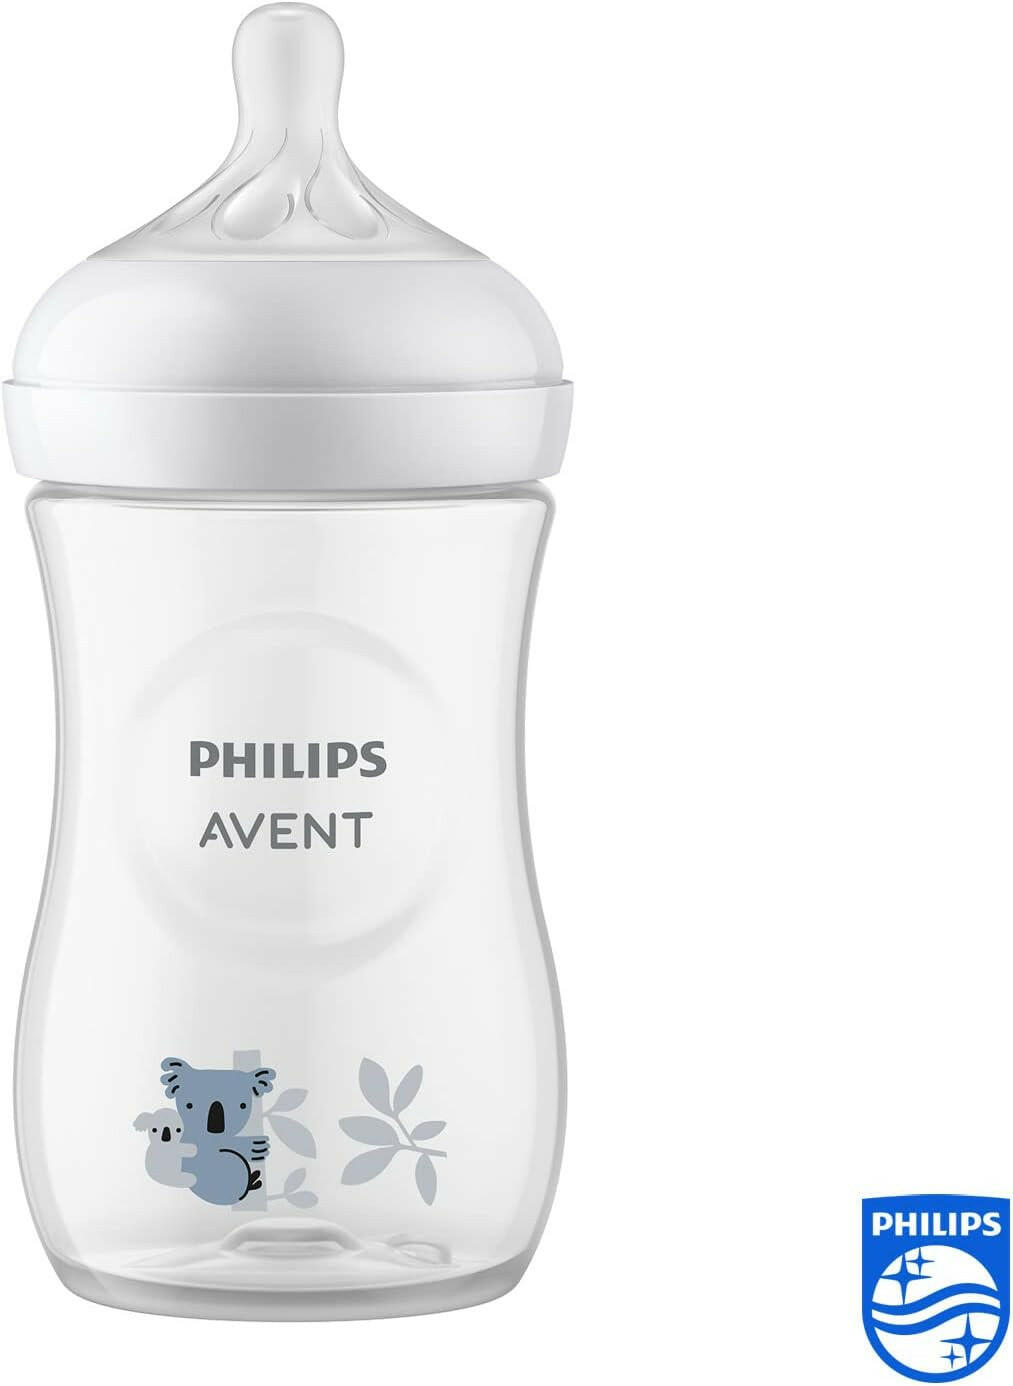 Philips Avent Natural Response Baby Bottle - 260ml Baby Milk Bottle, BPA Free for Babies 1 Month+, Koala Pattern